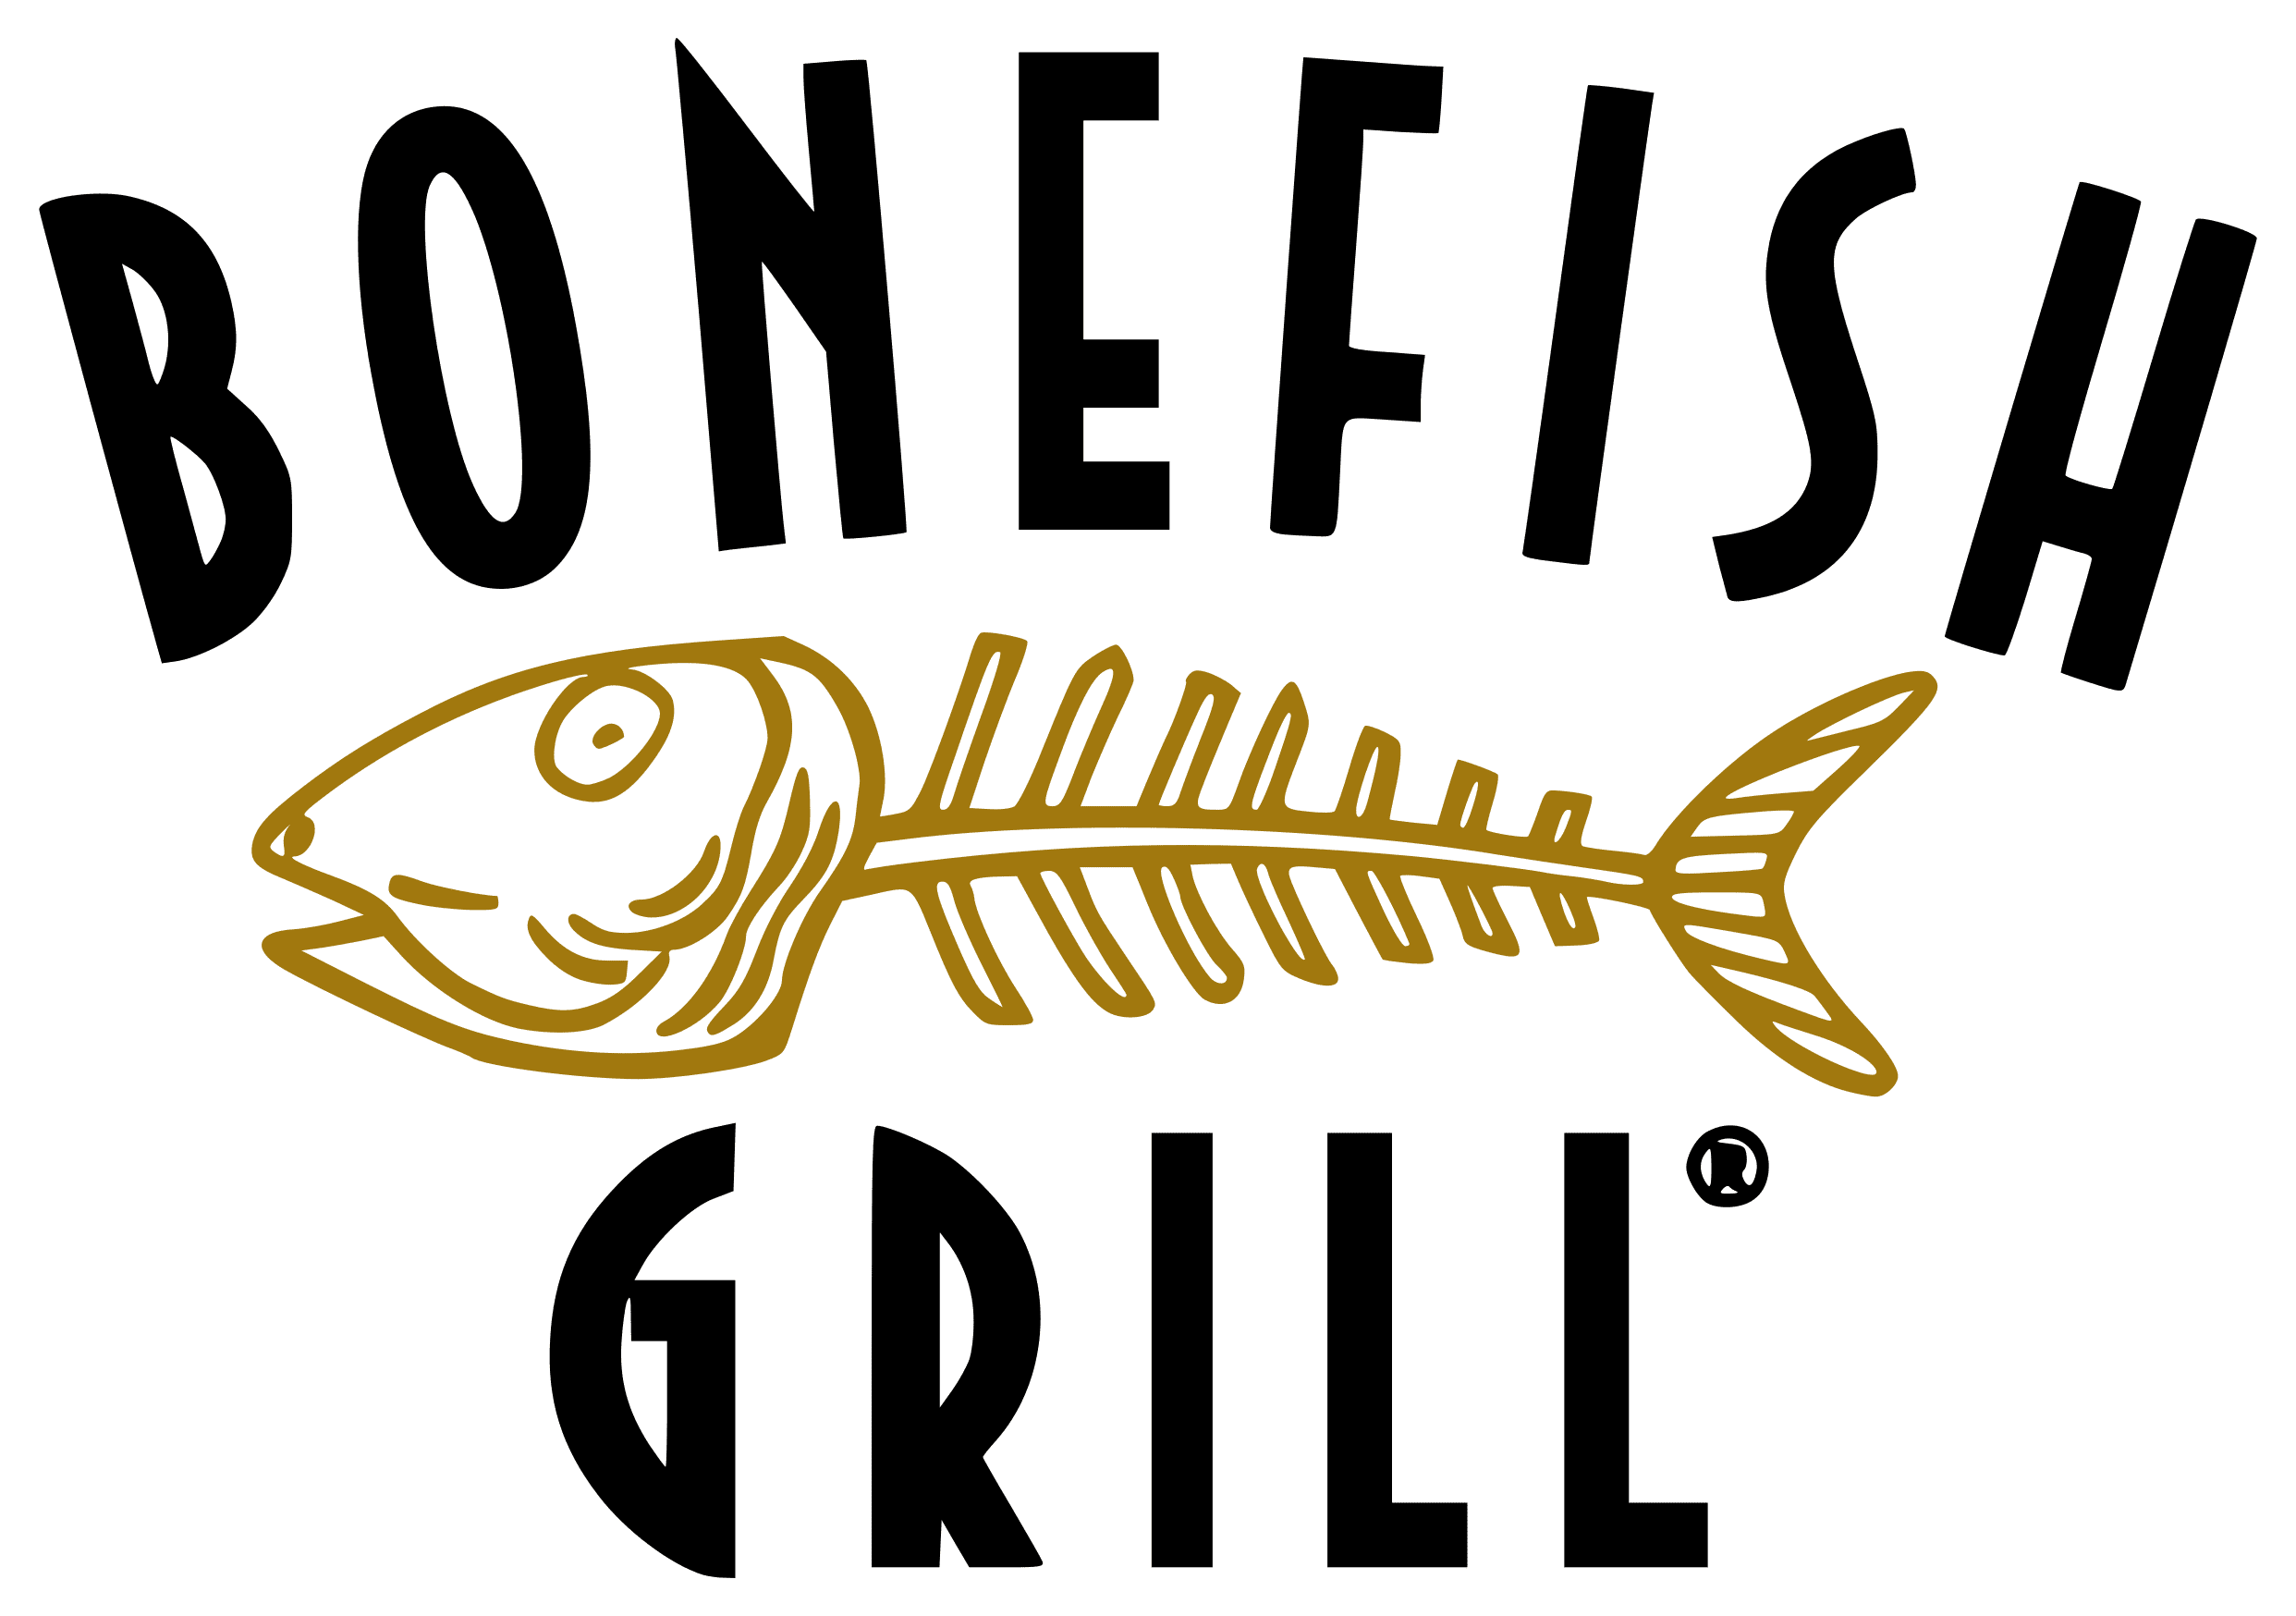 Bonefish Grill Restaurant